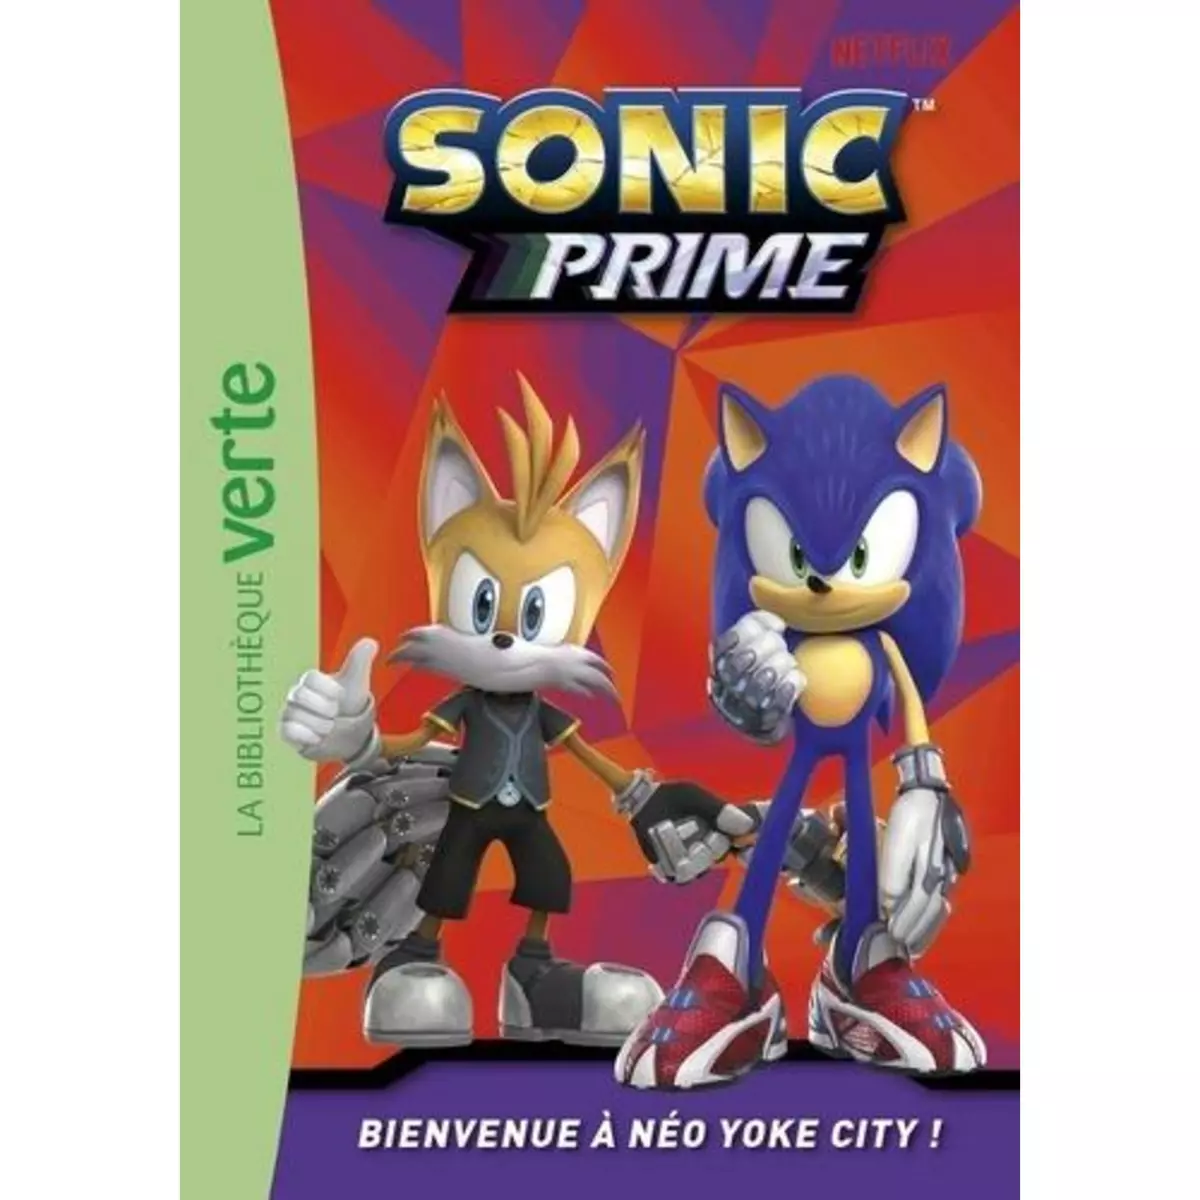  SONIC PRIME TOME 1 : BIENVENUE A NEO YOKE CITY !, Sega